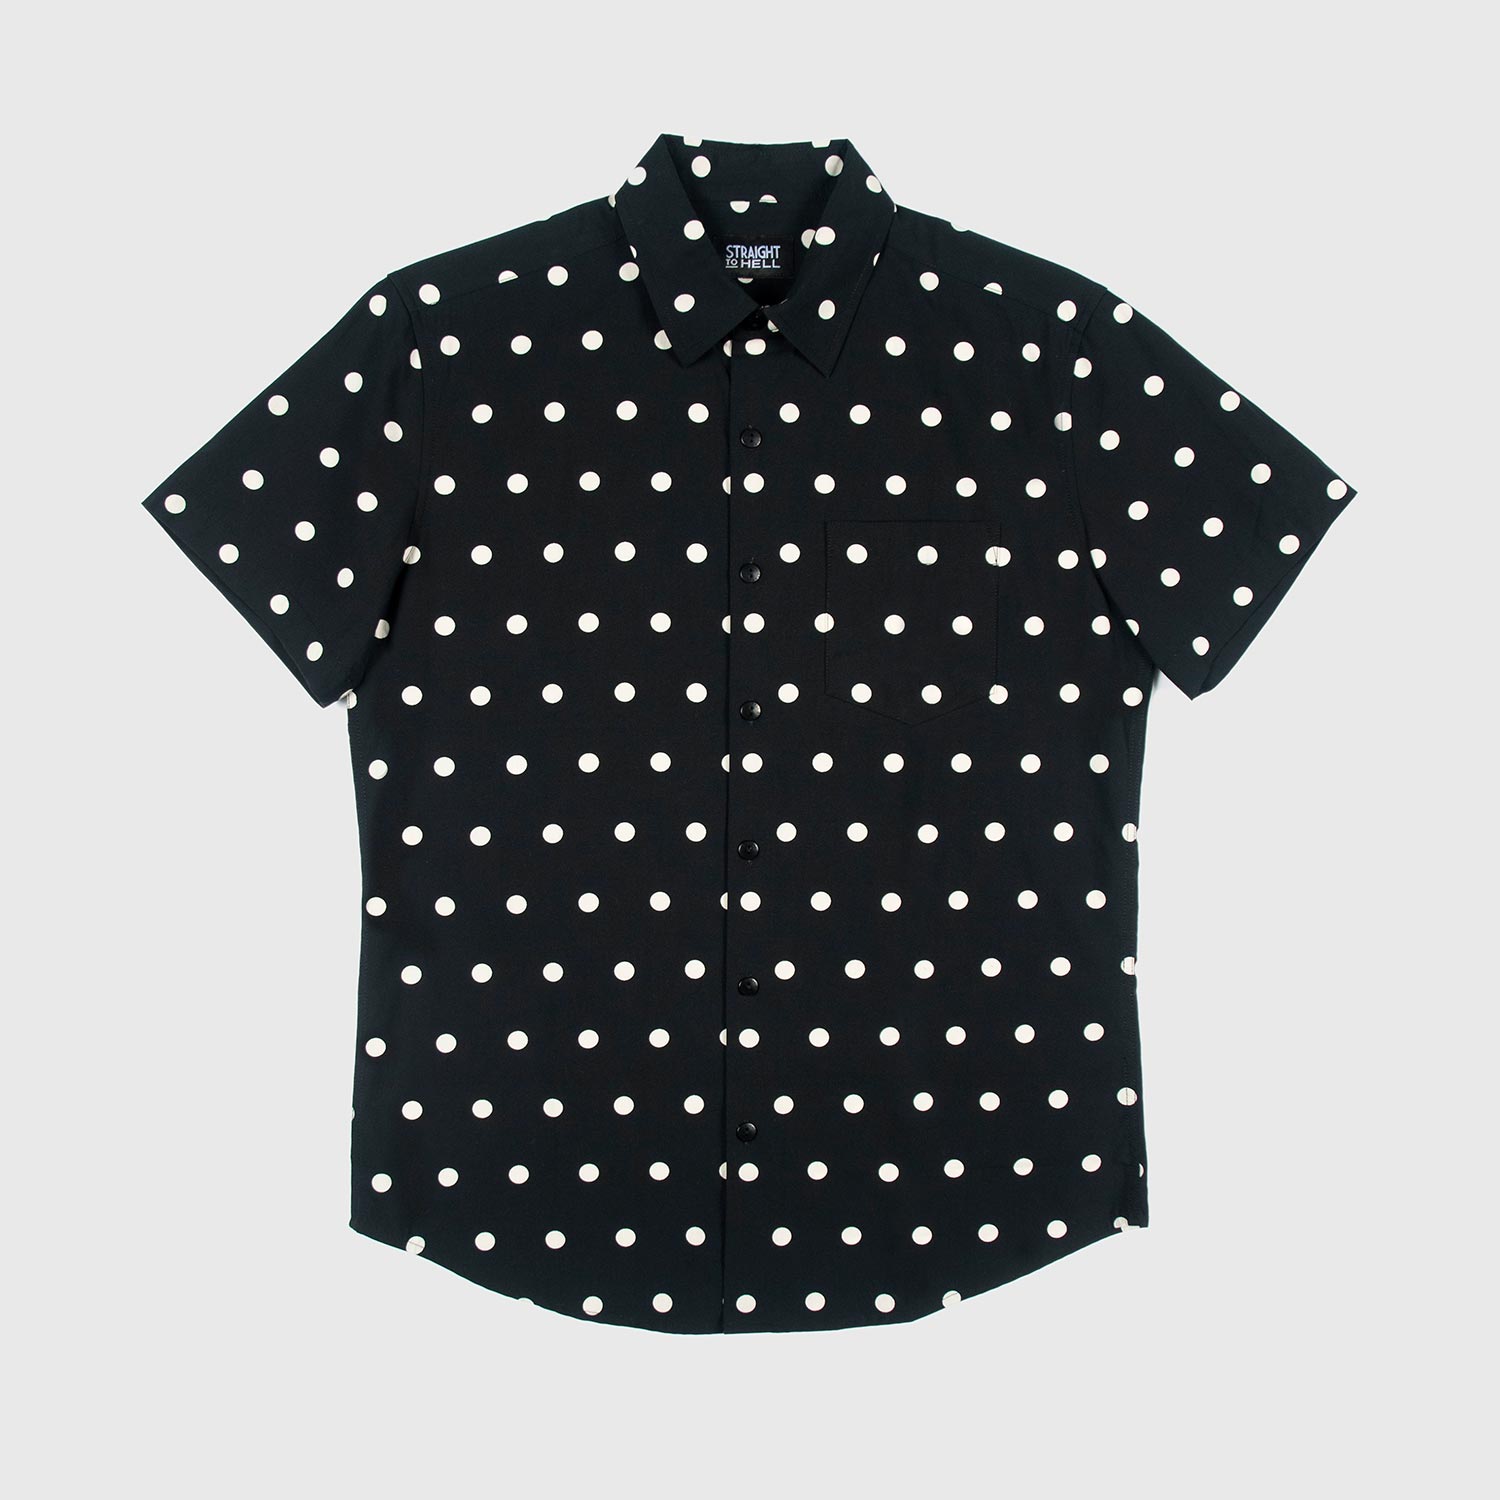 Stepping Stone - Black and White Polka Dot Shirt (Size XS, S, M, L